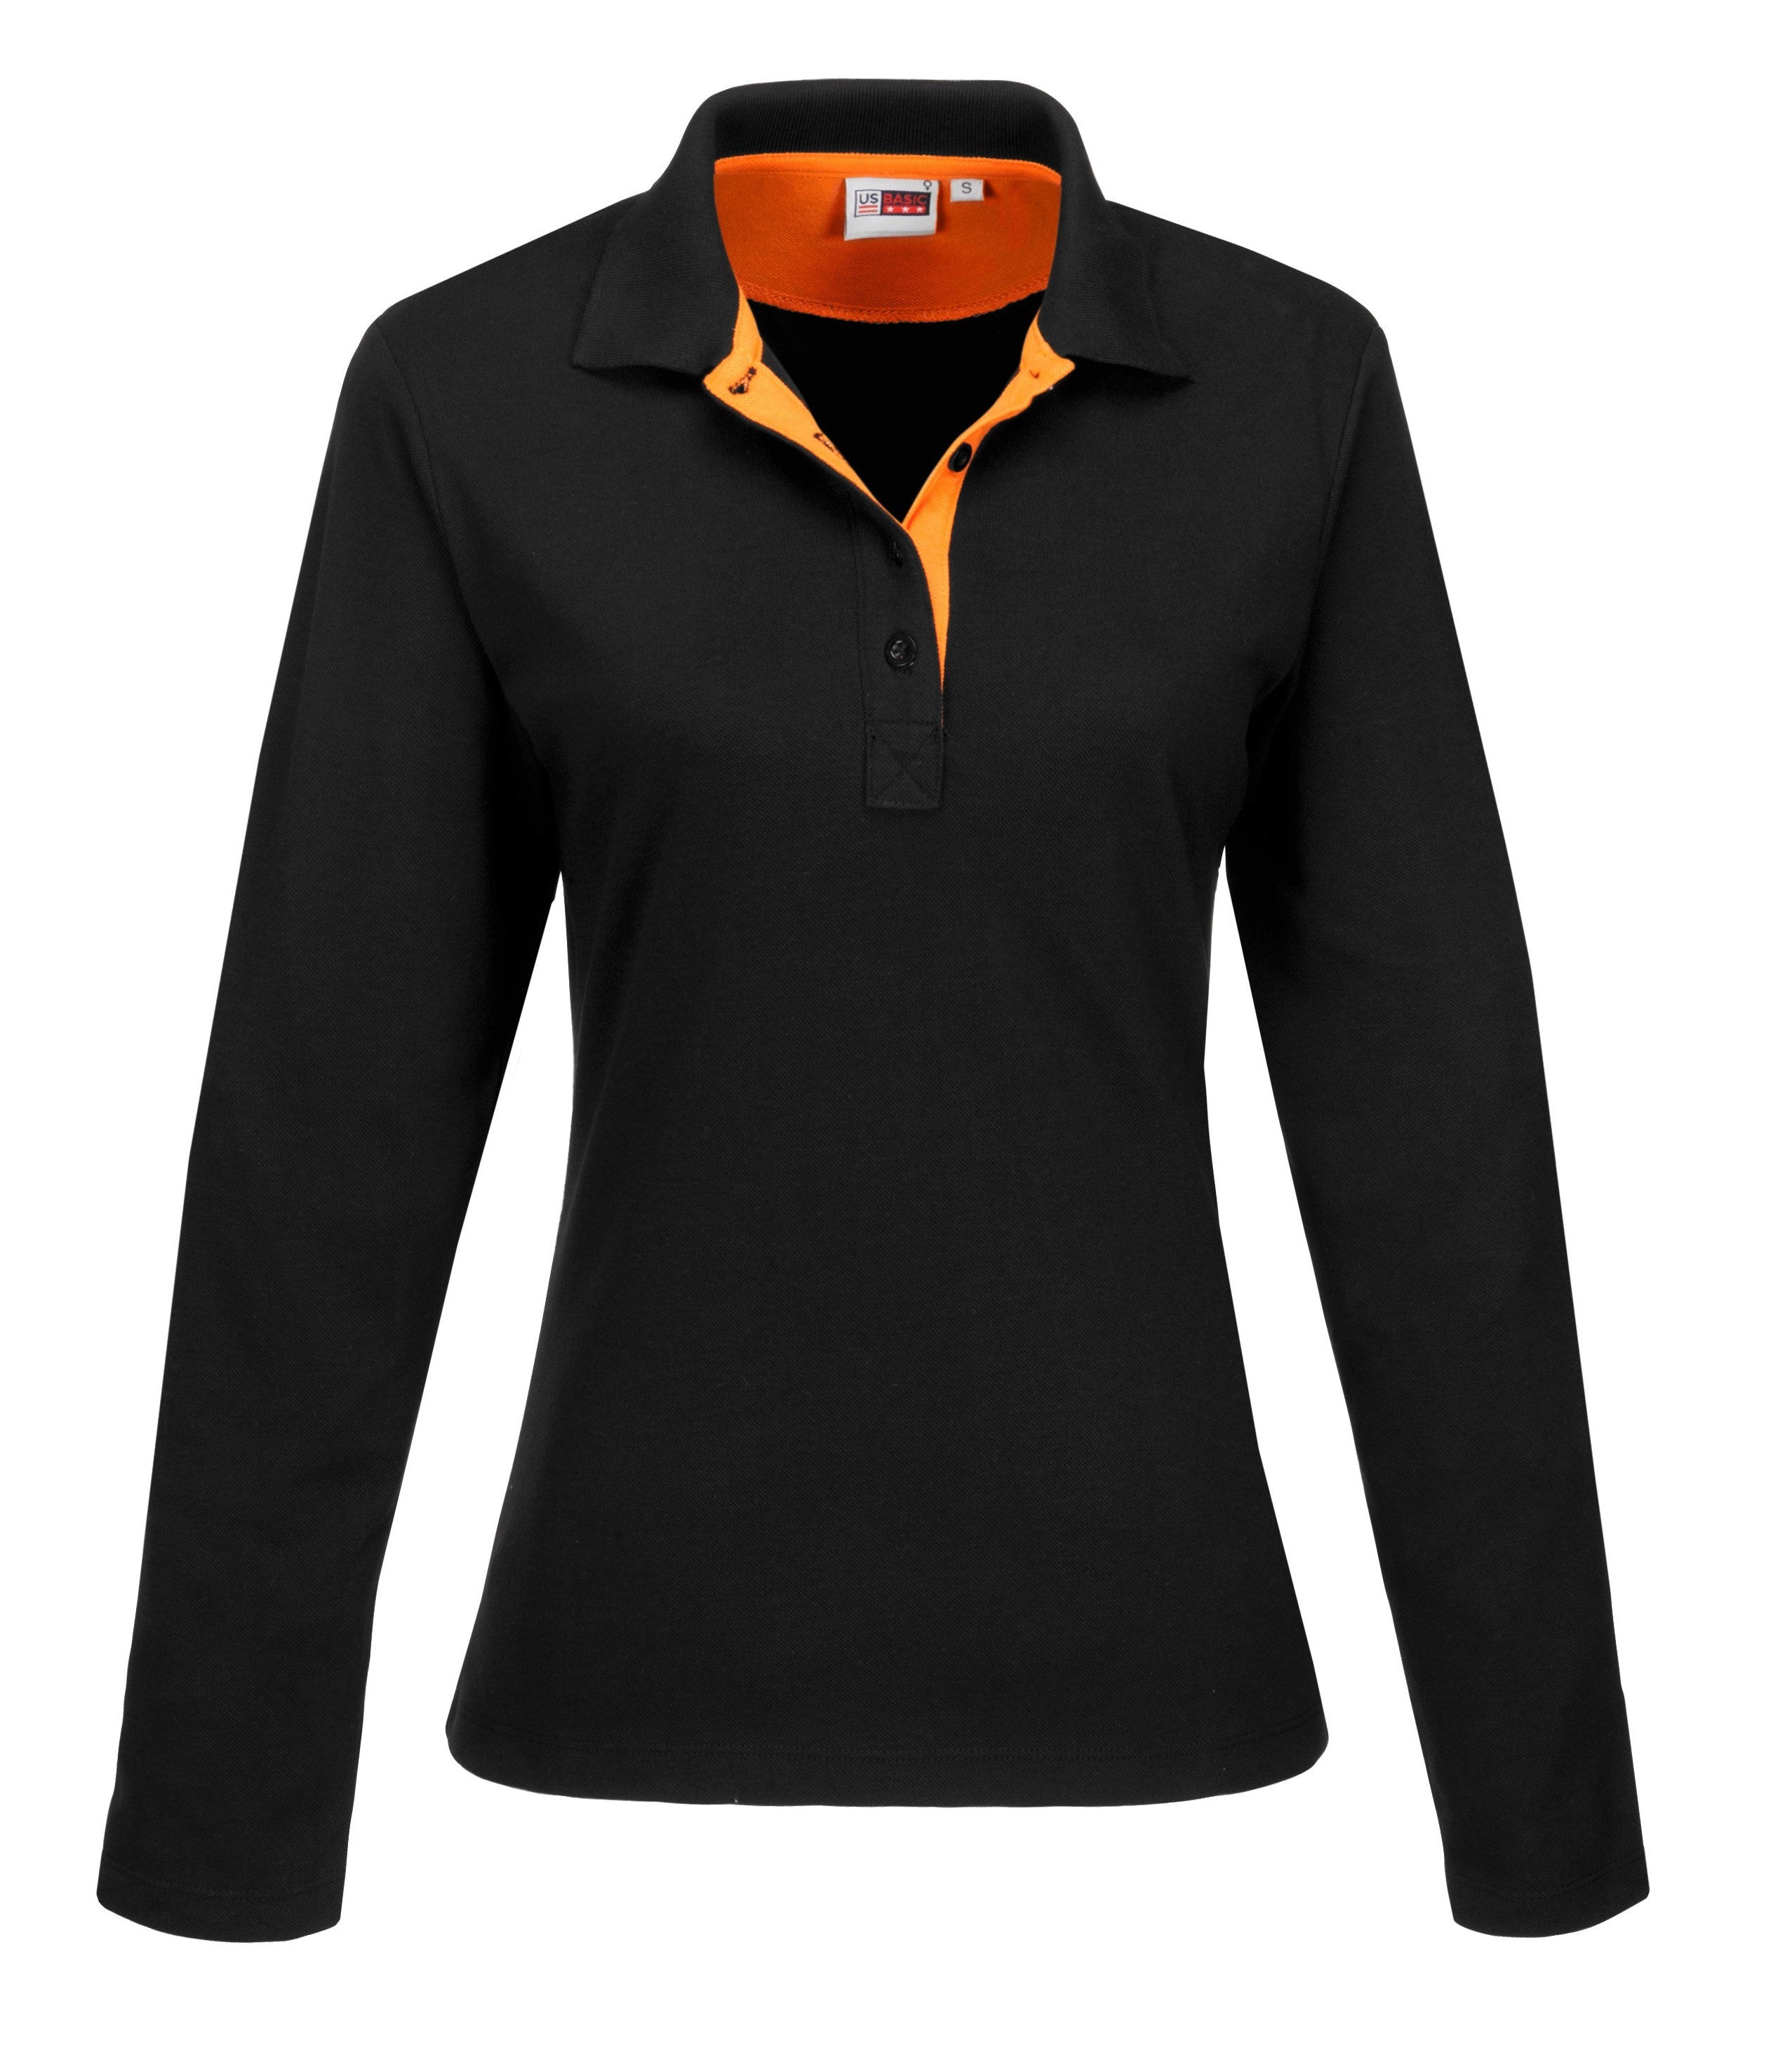 Ladies Long Sleeve Solo Golf Shirt - Orange Only-2XL-Orange-O